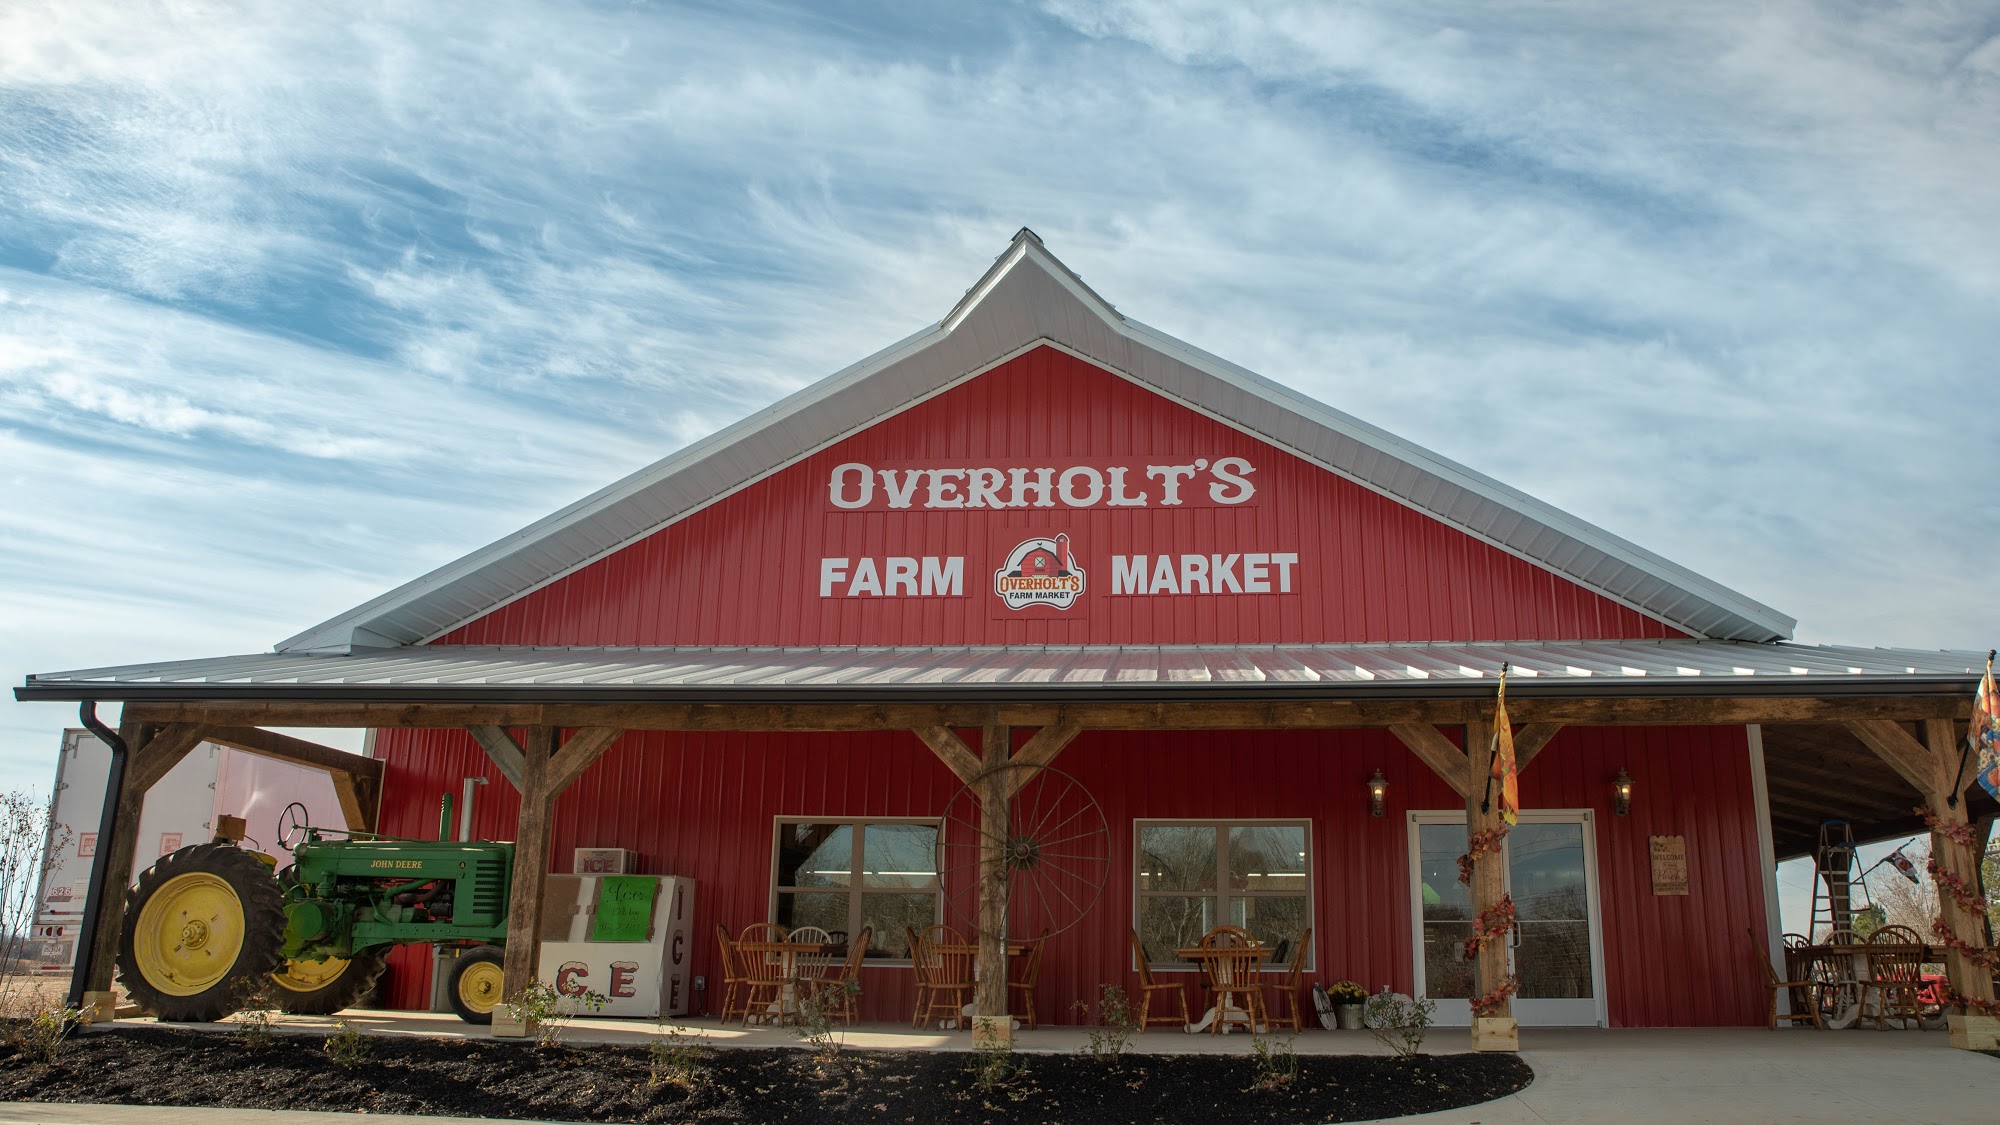 Overholt’s Farm Market